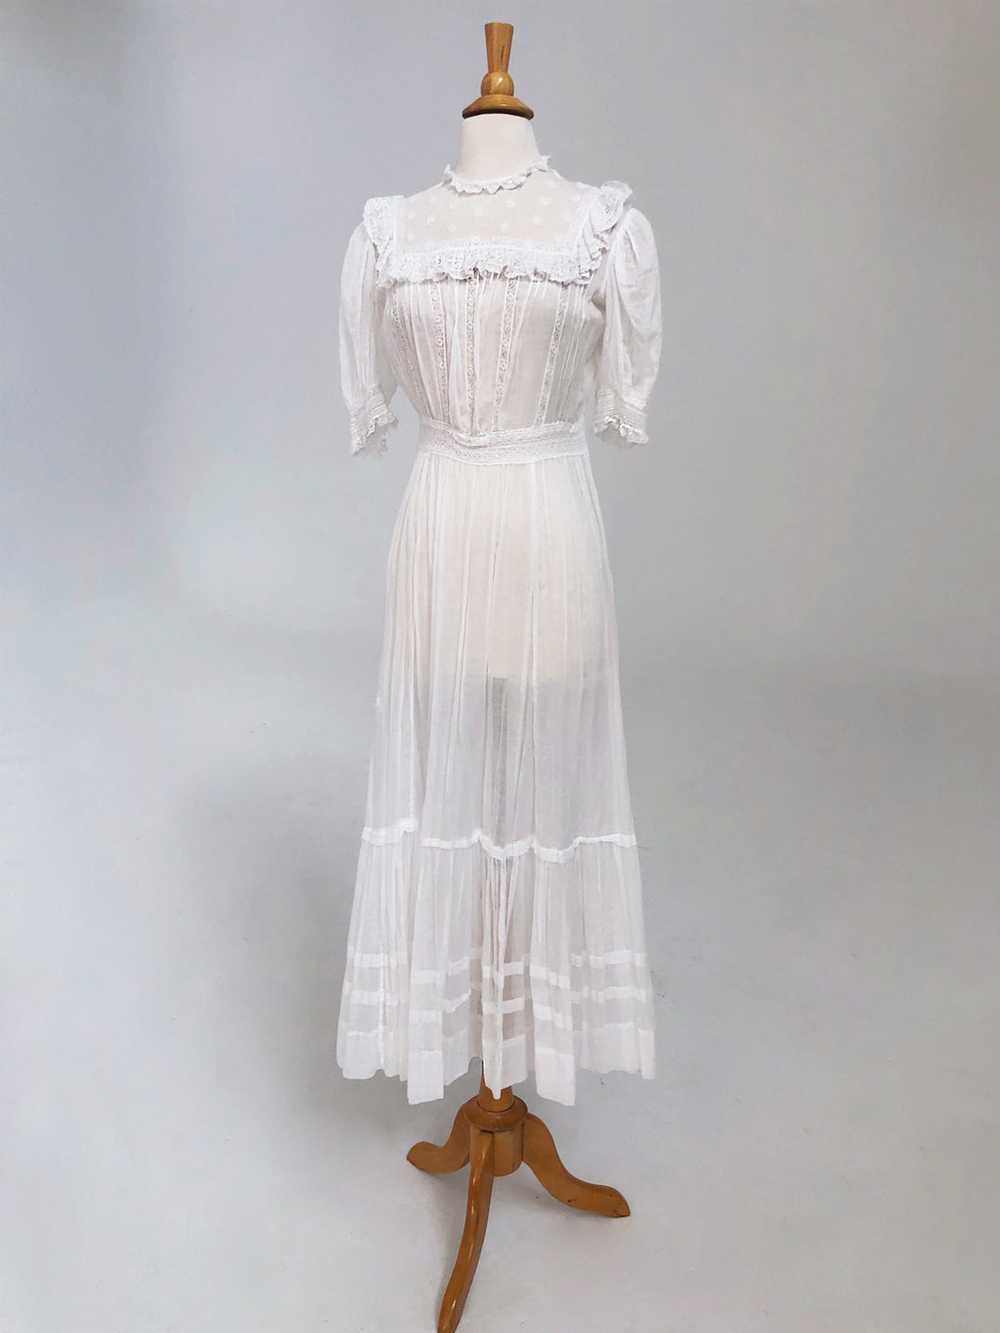 Victorian White Cotton Dress - image 5